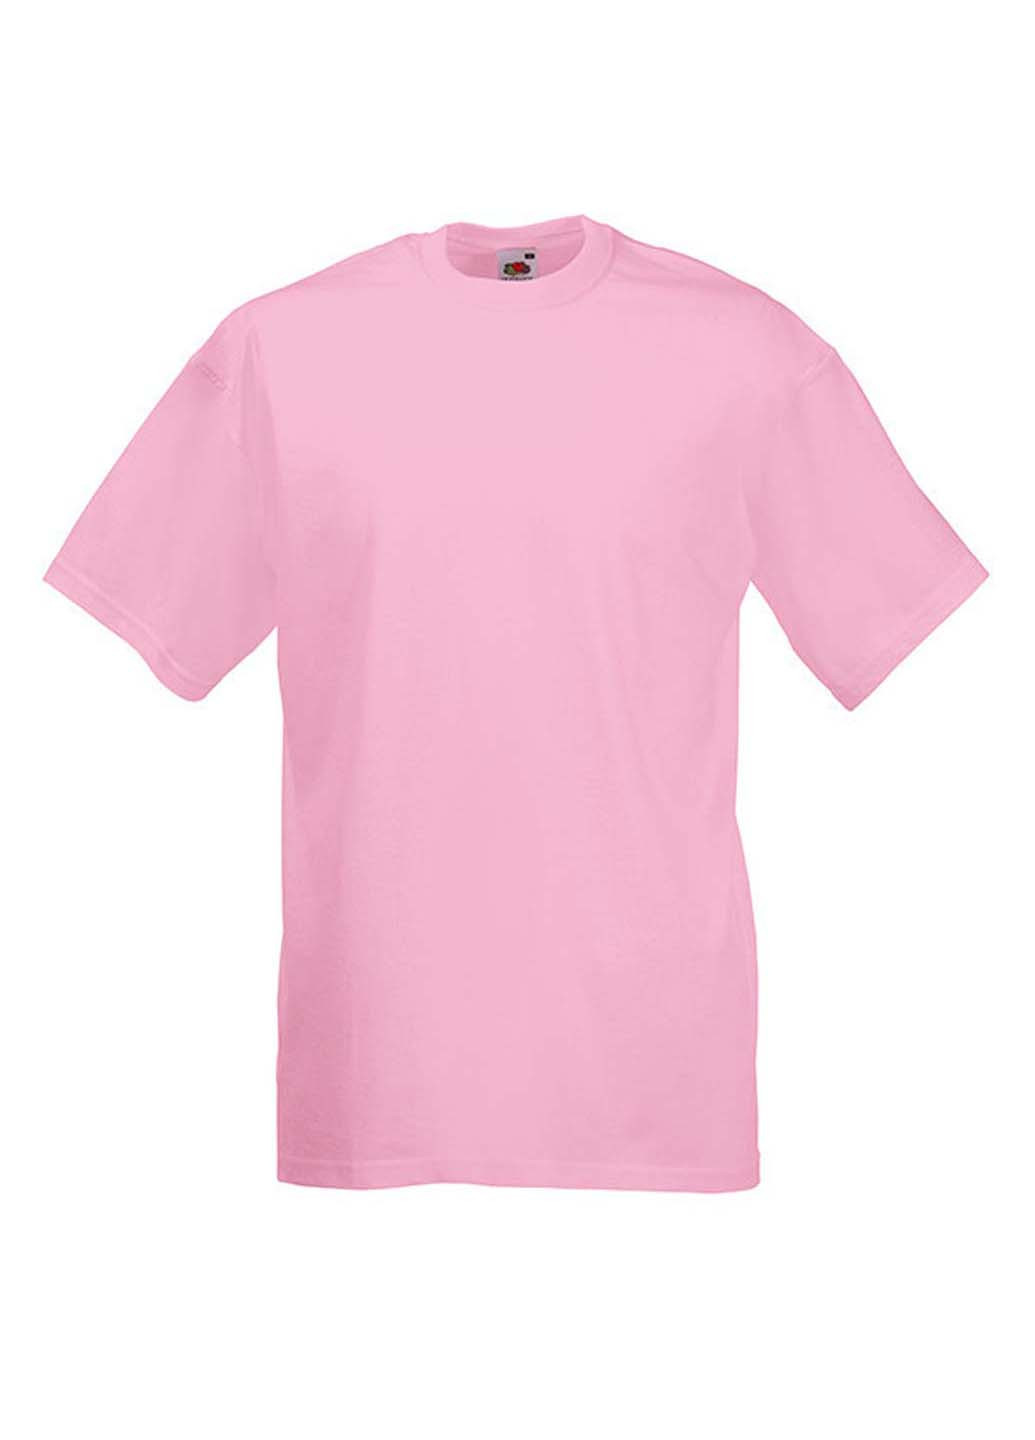 Светло-розовая футболка Fruit of the Loom ValueWeight